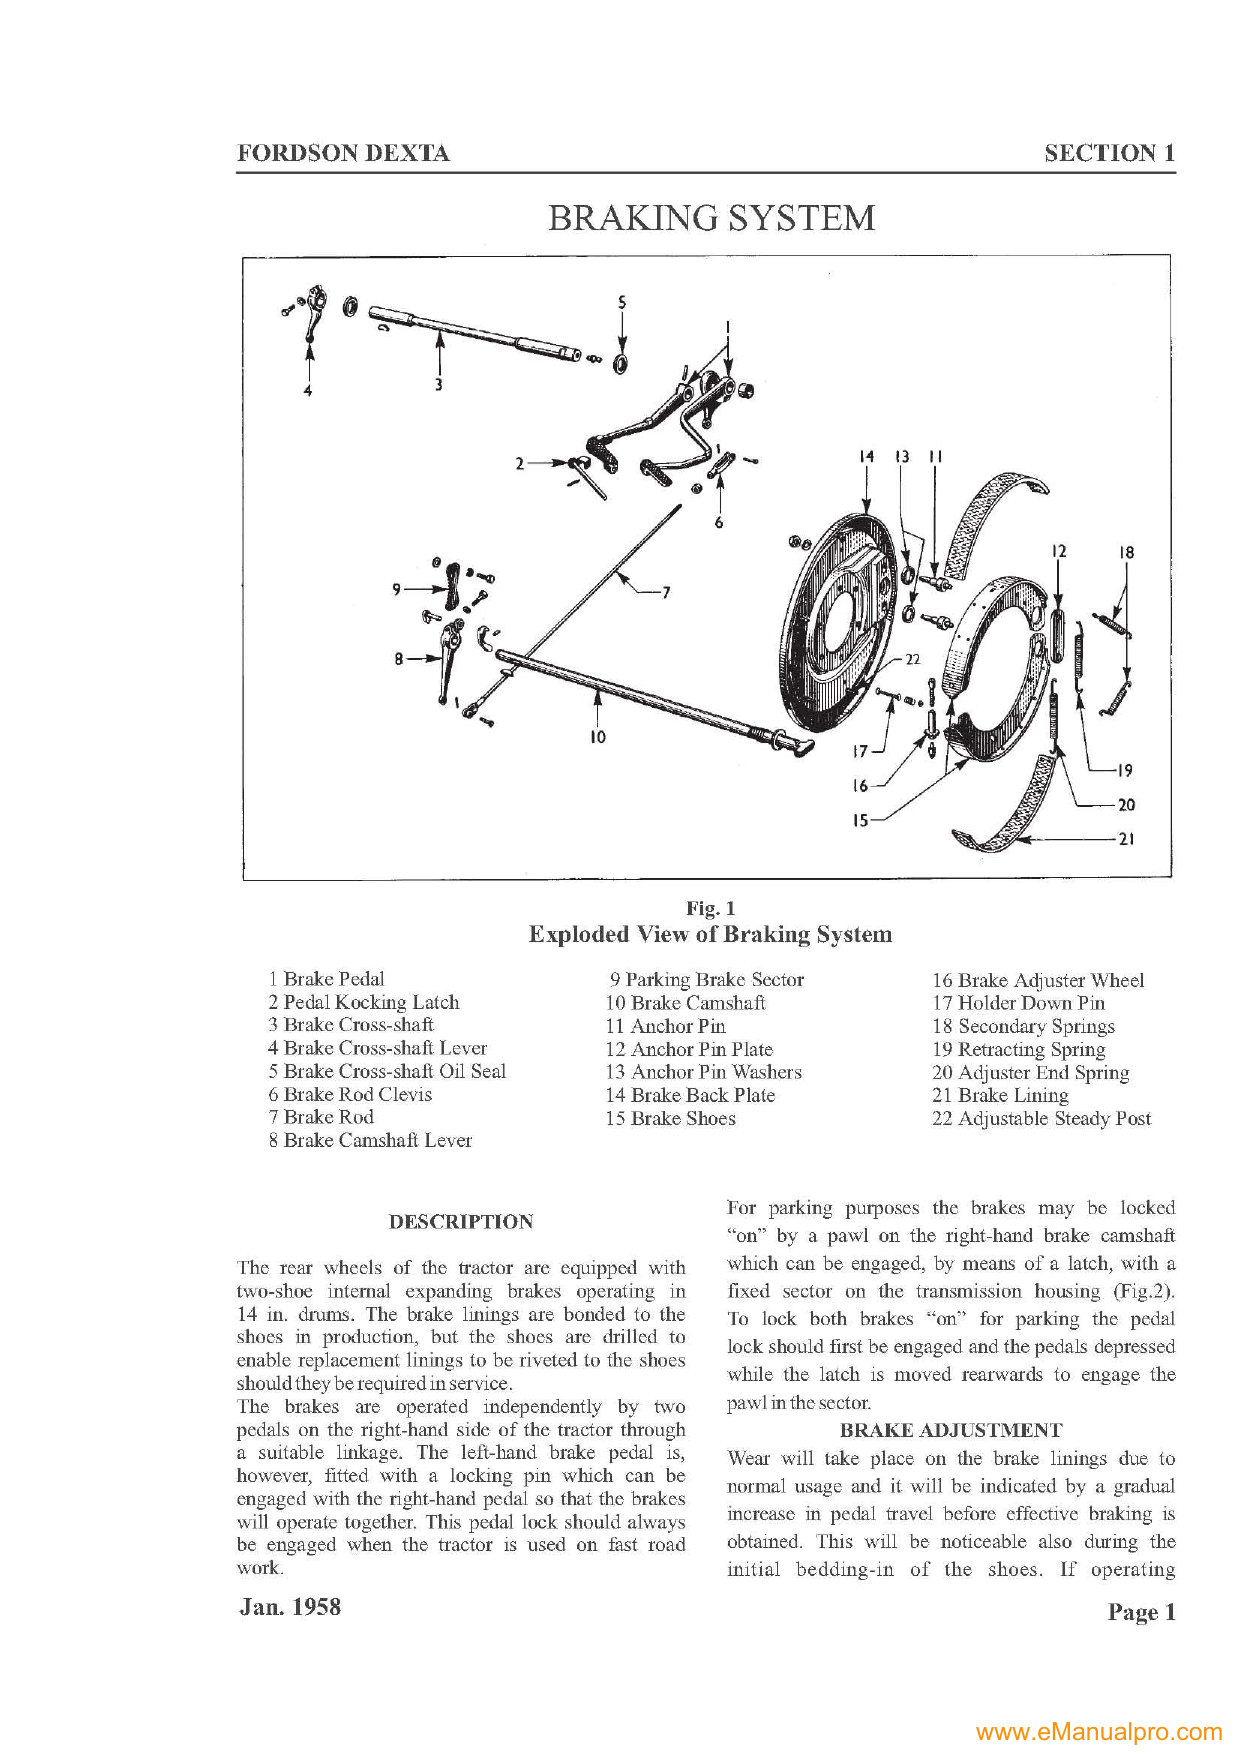 1962-1964 Fordson™ Dexta, Super Dexta tractor workshop manual Preview image 3